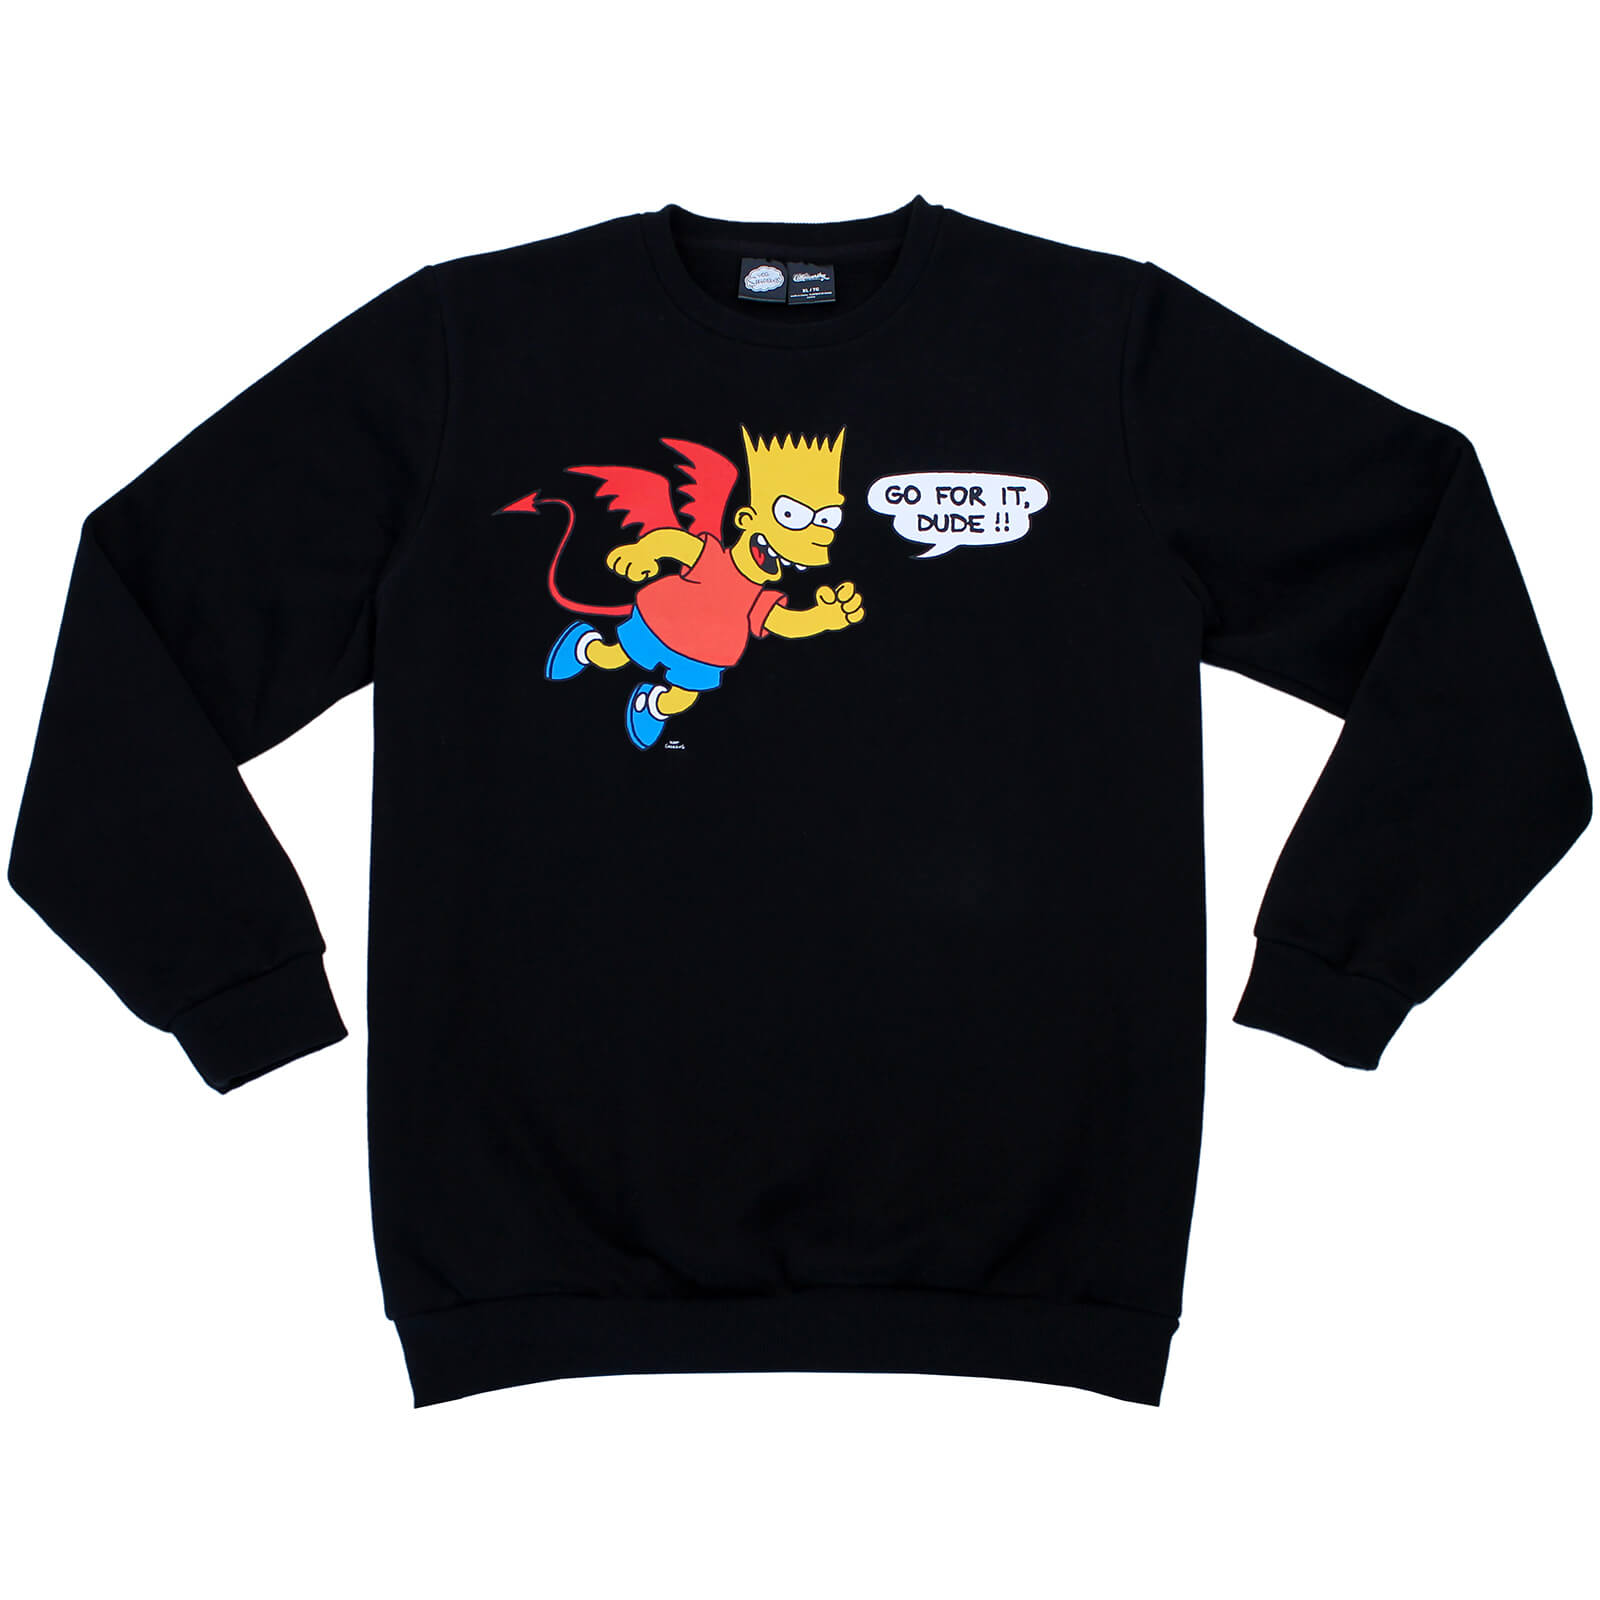 Cakeworthy x The Simpsons - Bart Simpson Devil Crewneck Sweatshirt - S